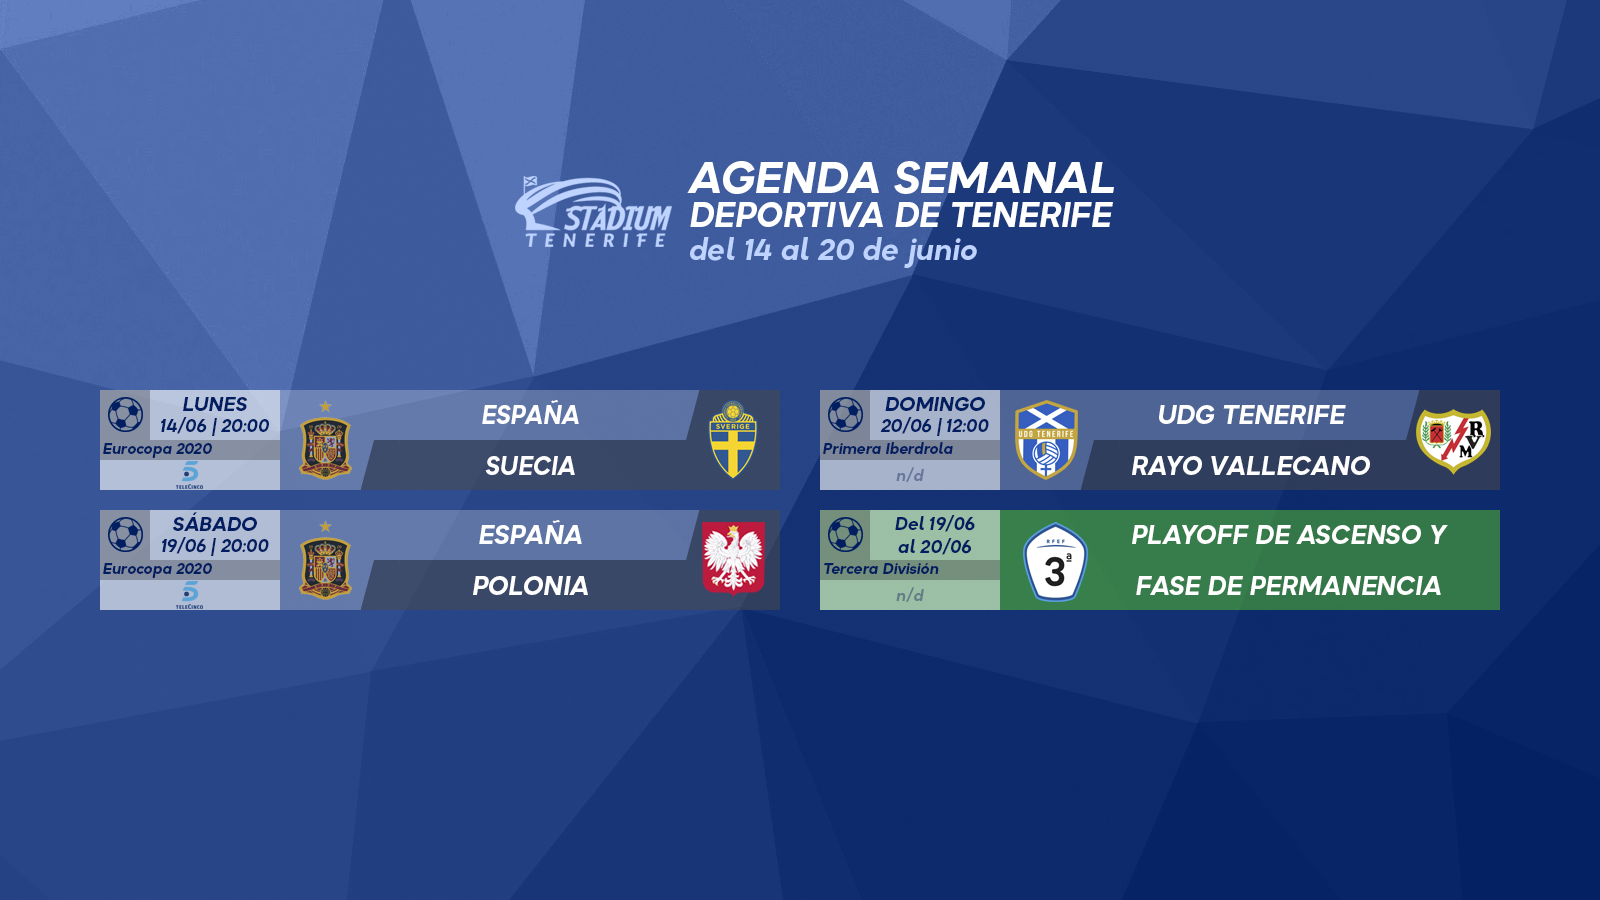 Agenda Semanal Deportiva de Tenerife (14 al 20 de junio)